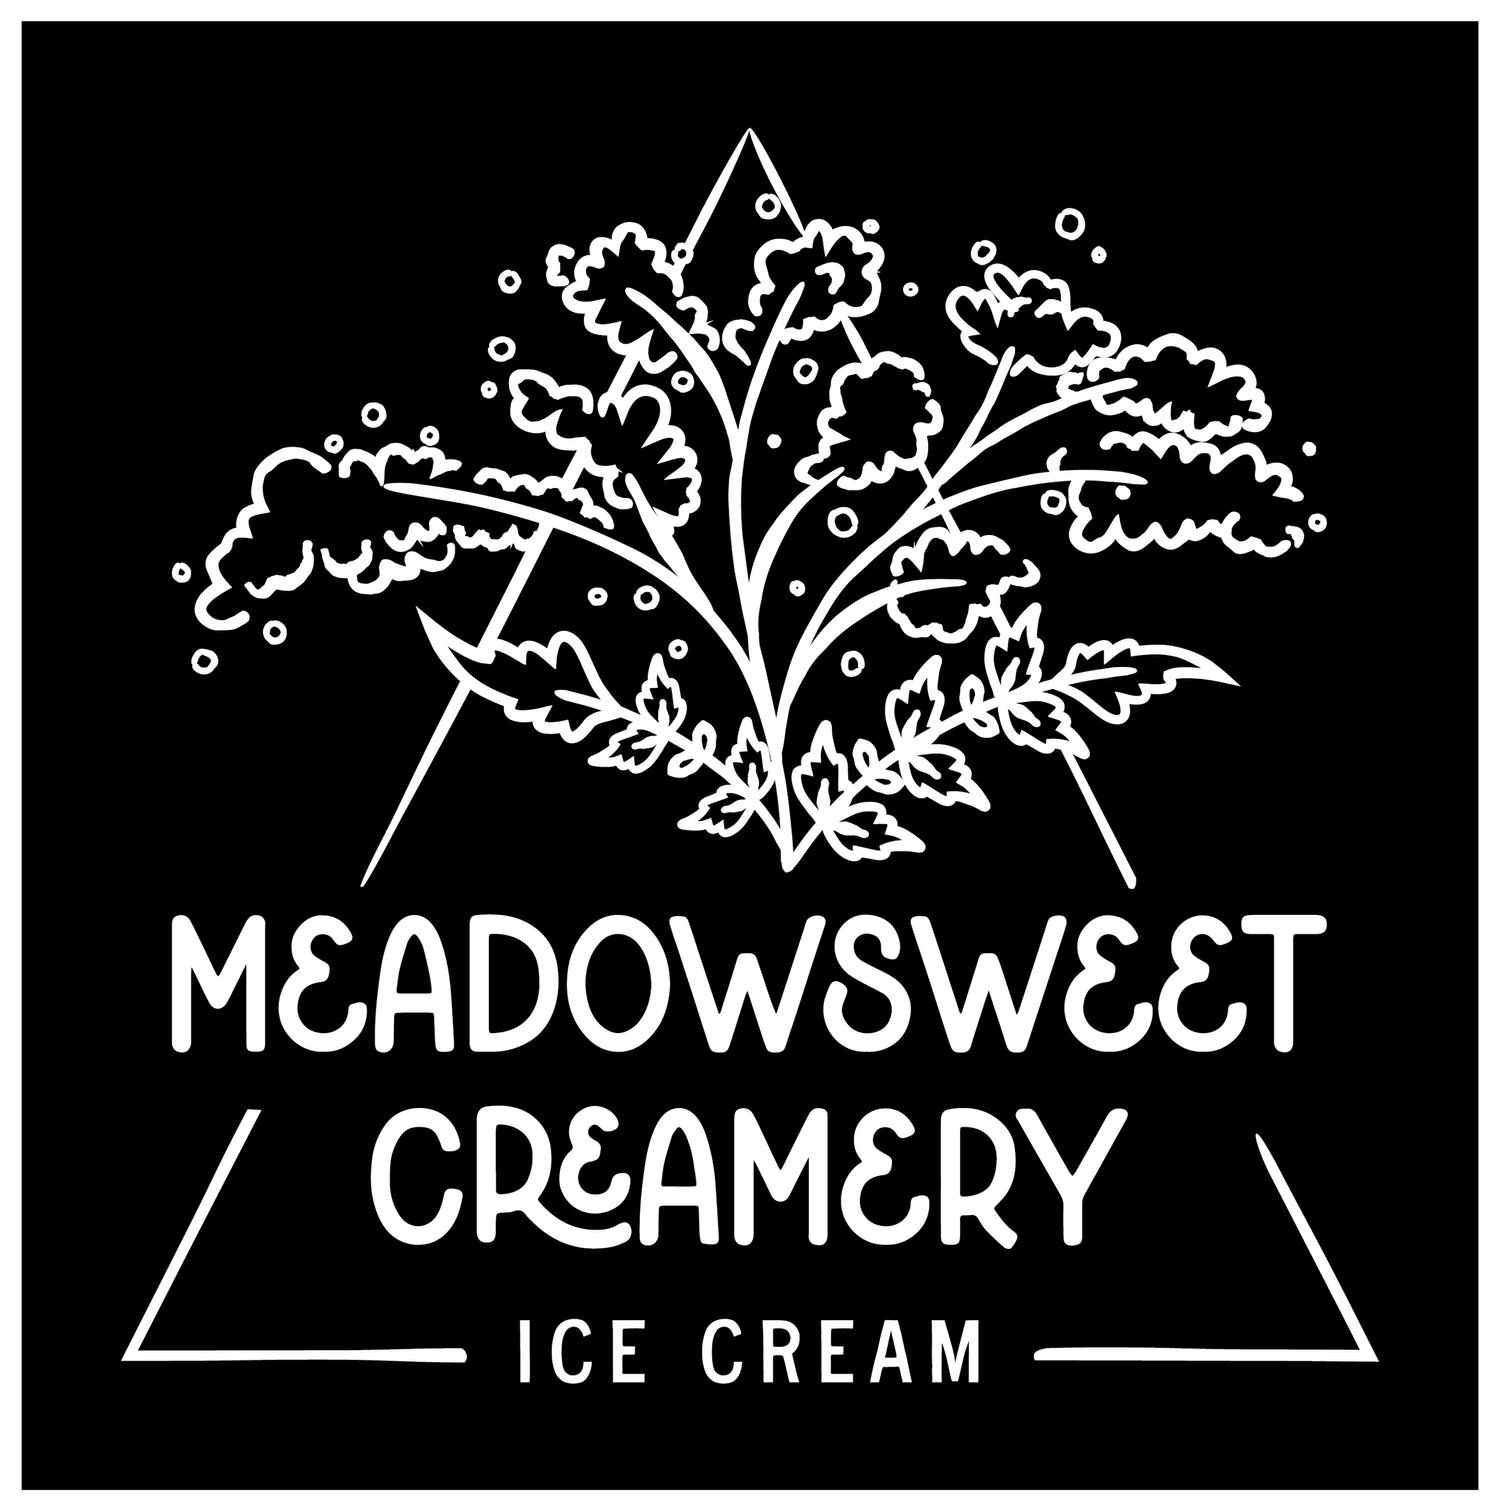 Meadowsweet Creamery